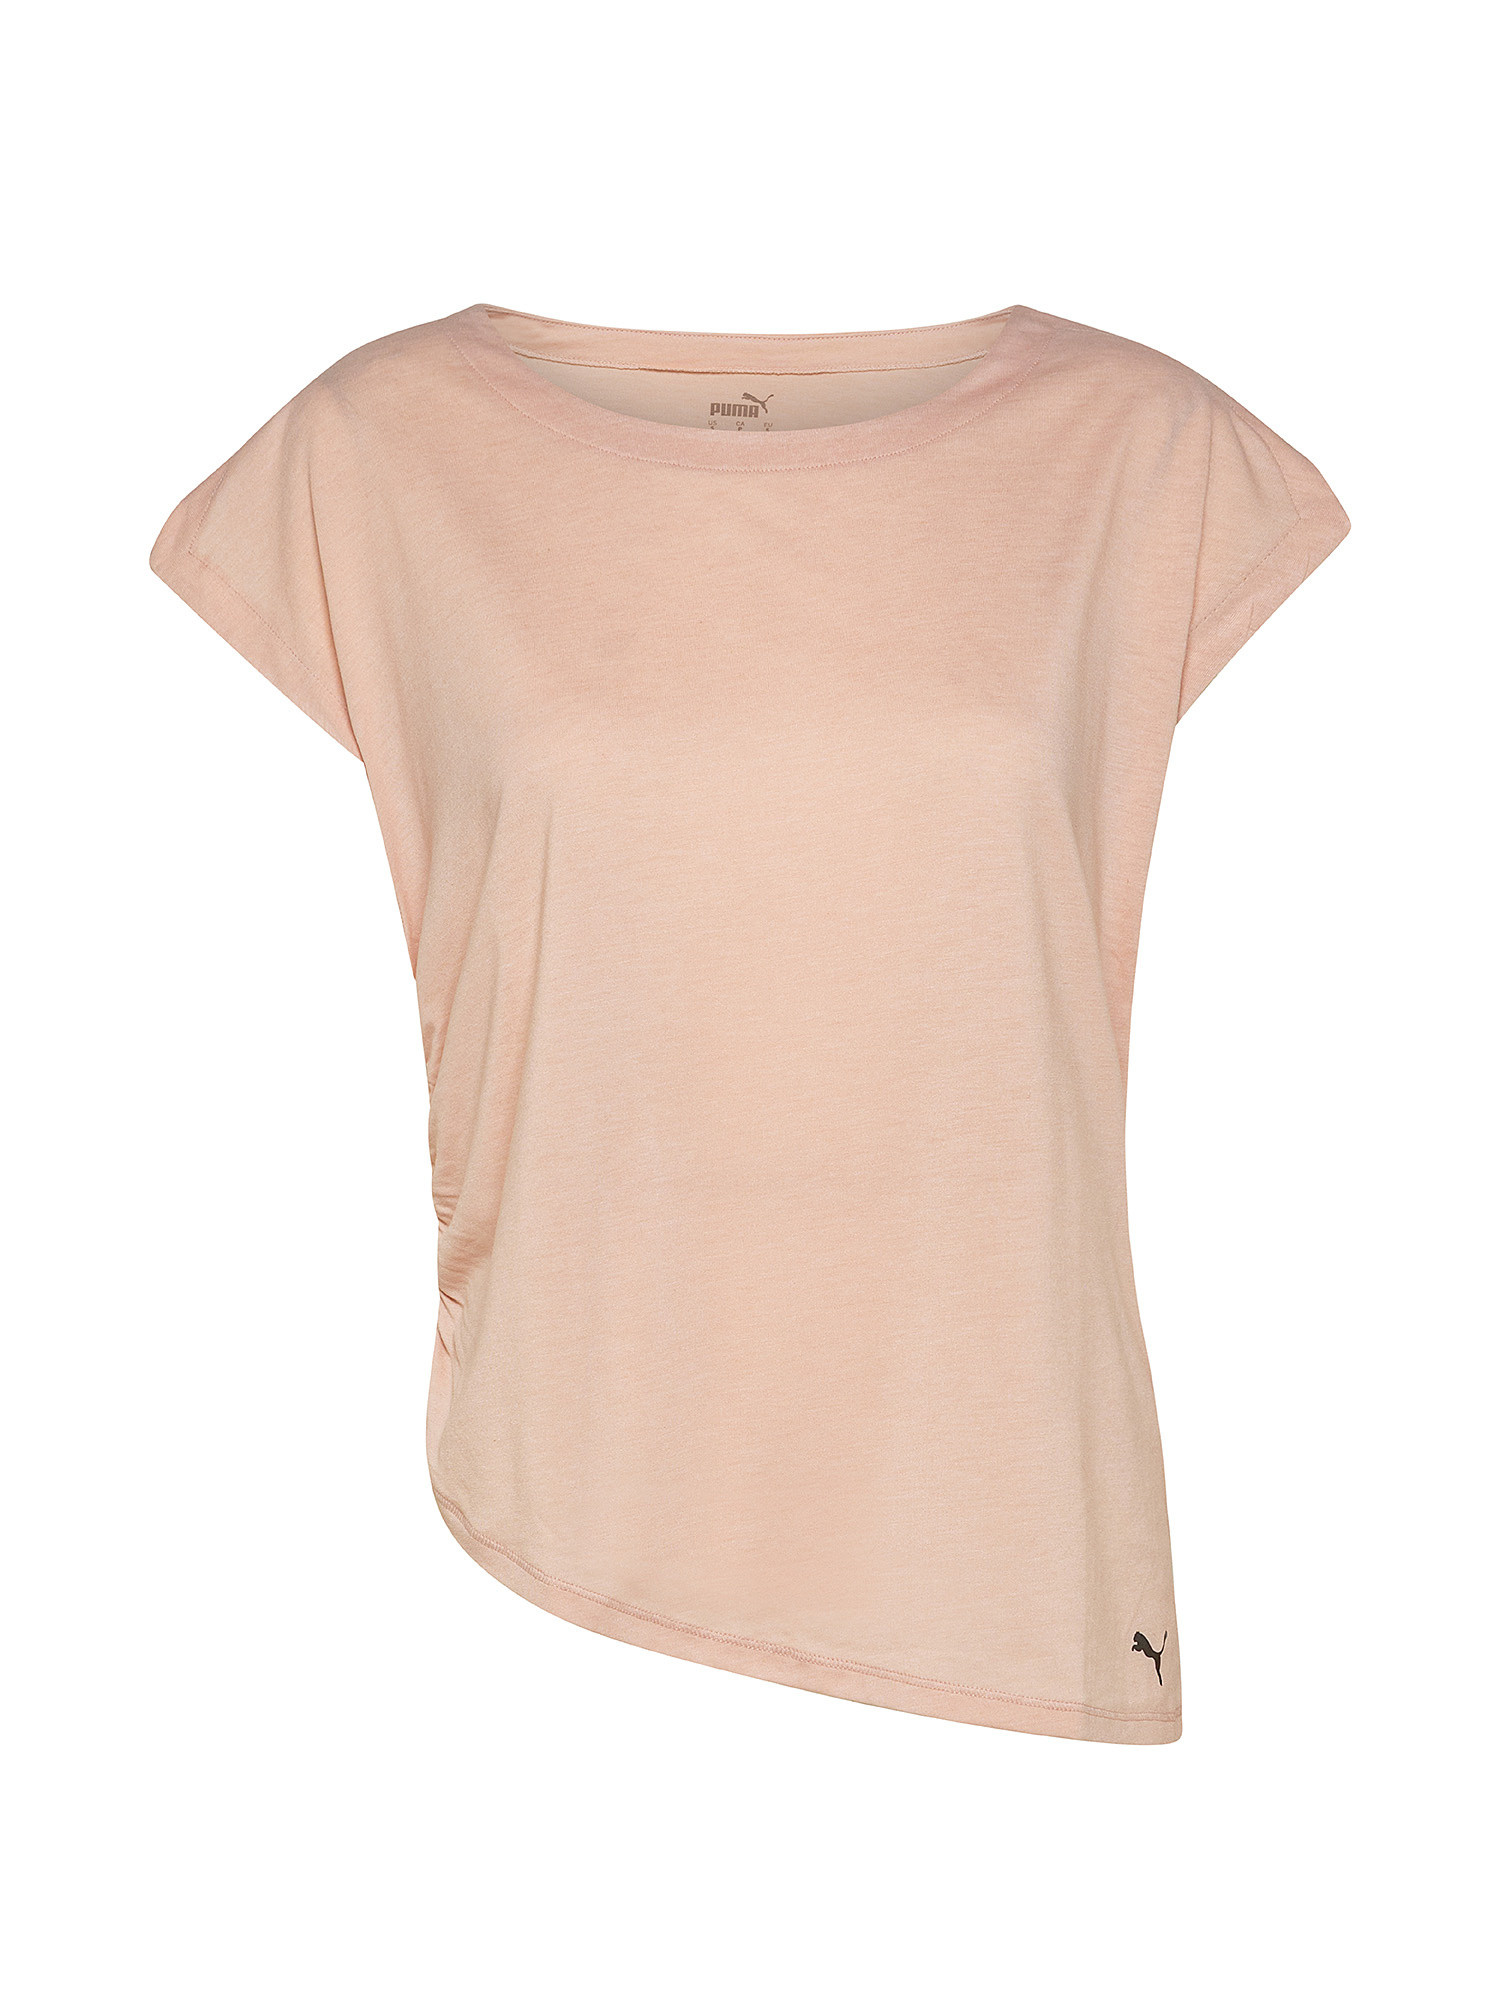 T-shirt asimmetrica, Rosa chiaro, large image number 0